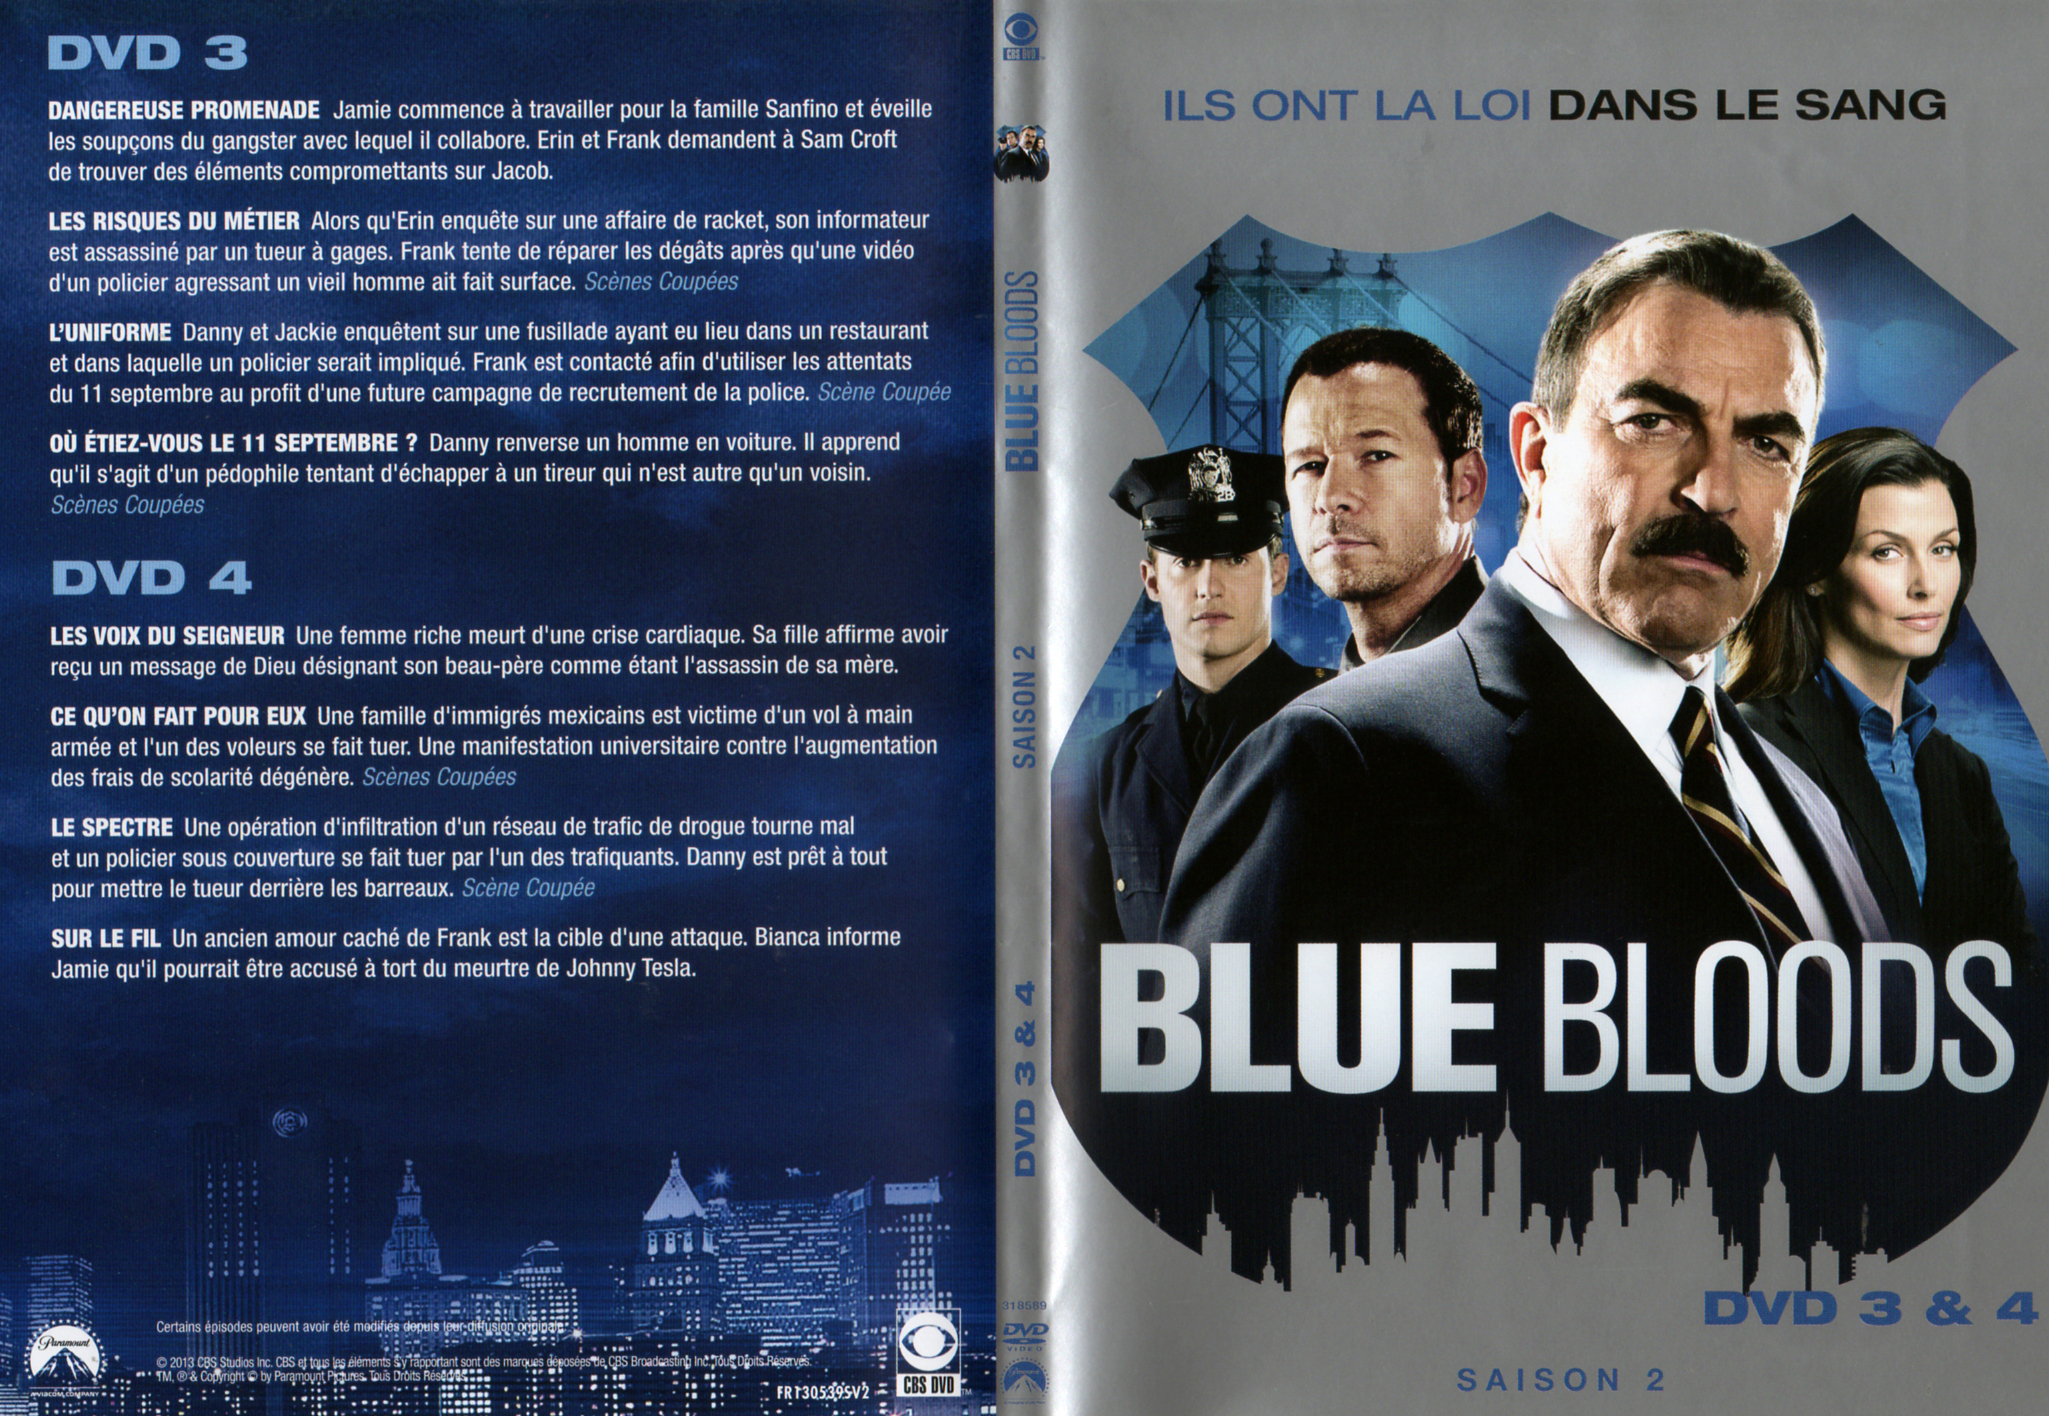 Jaquette DVD Blue Bloods Saison 2 DVD 2